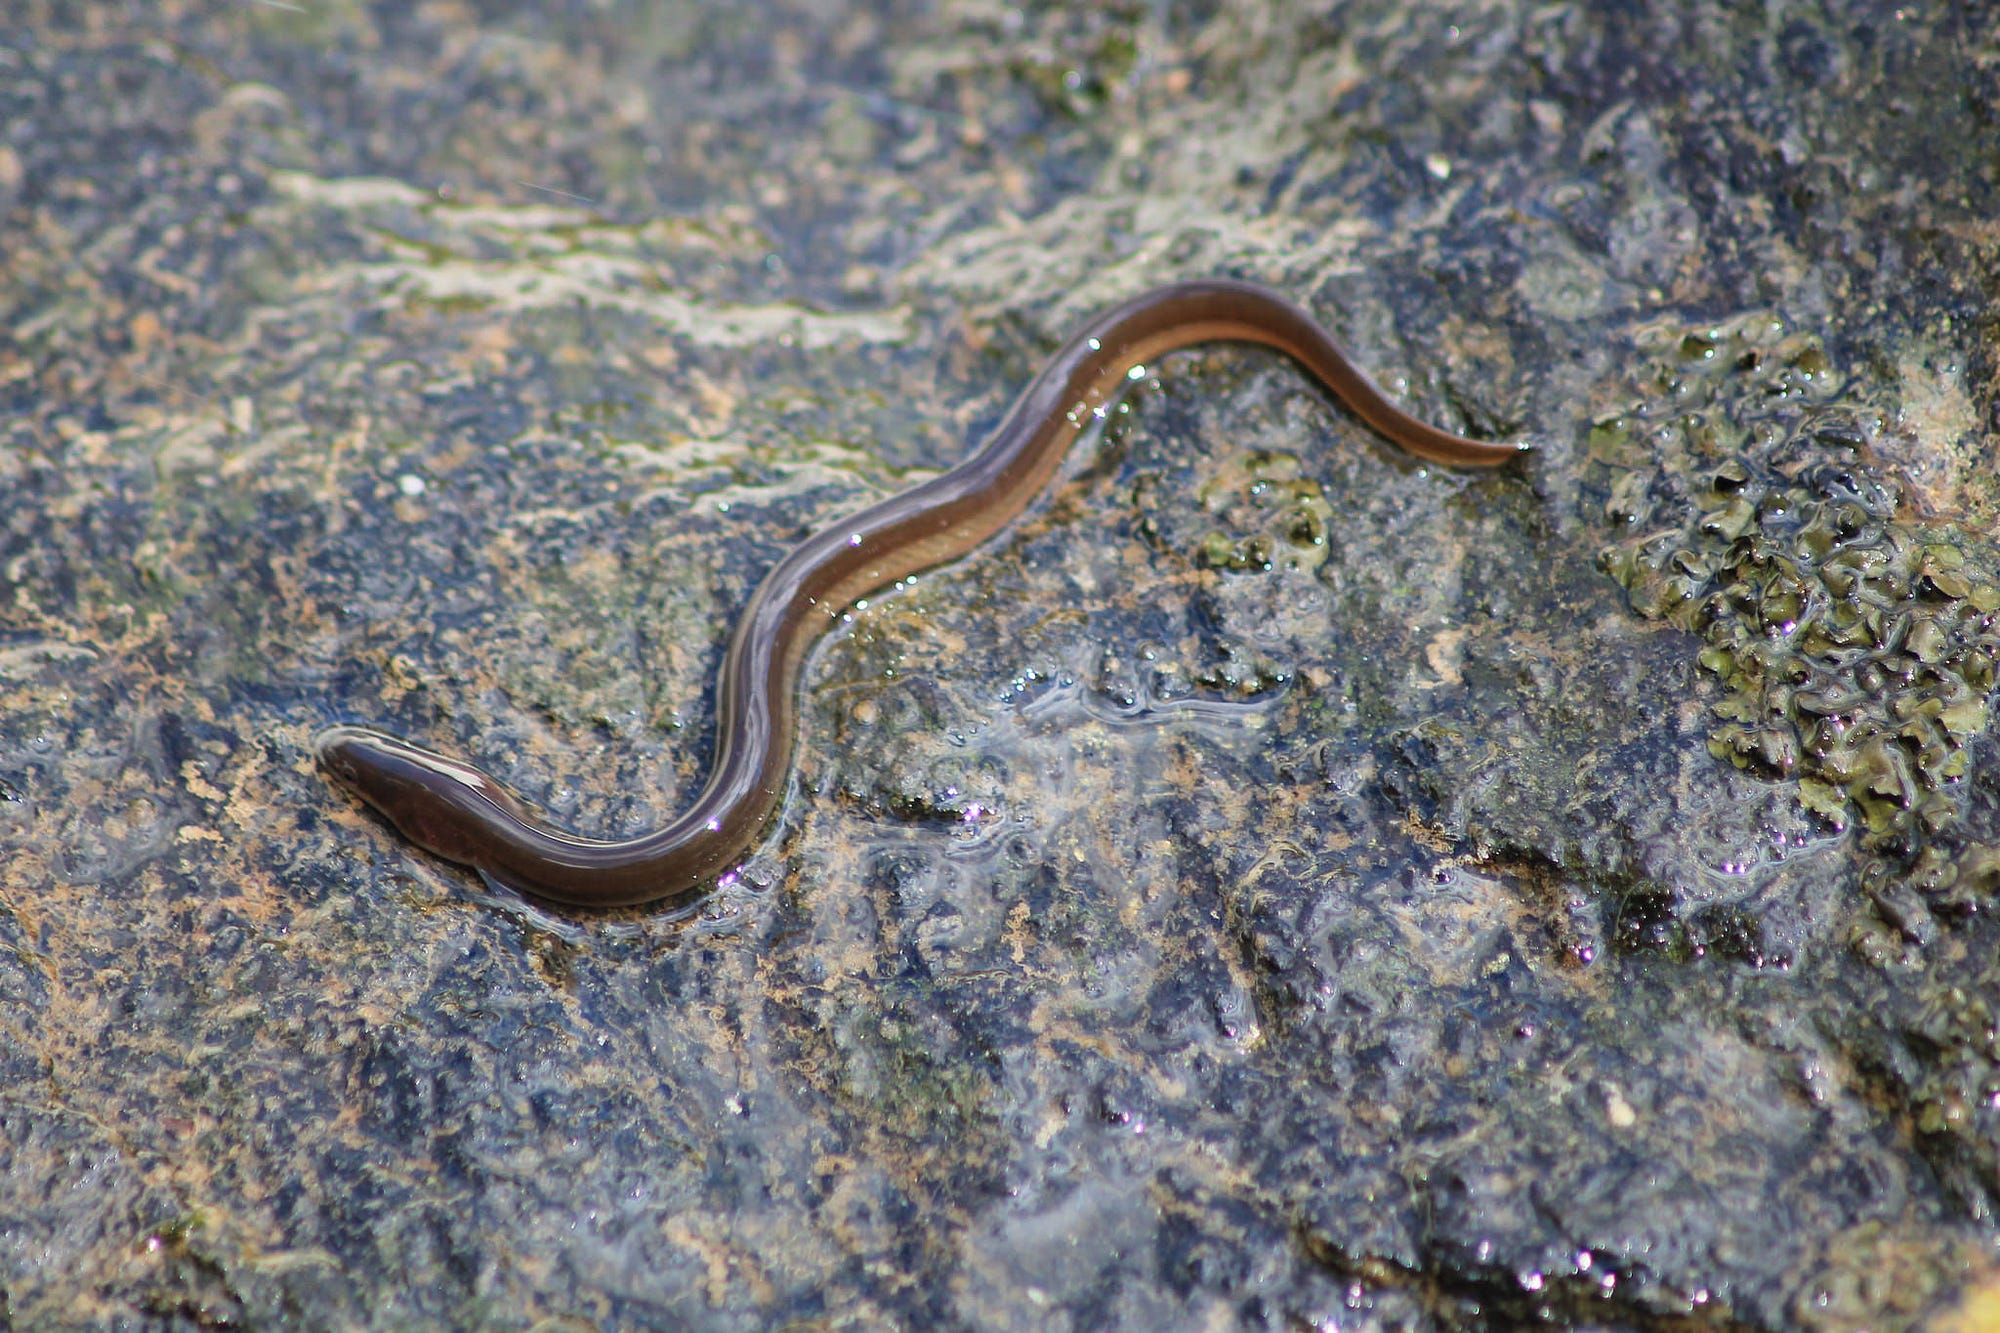 eels travel over land